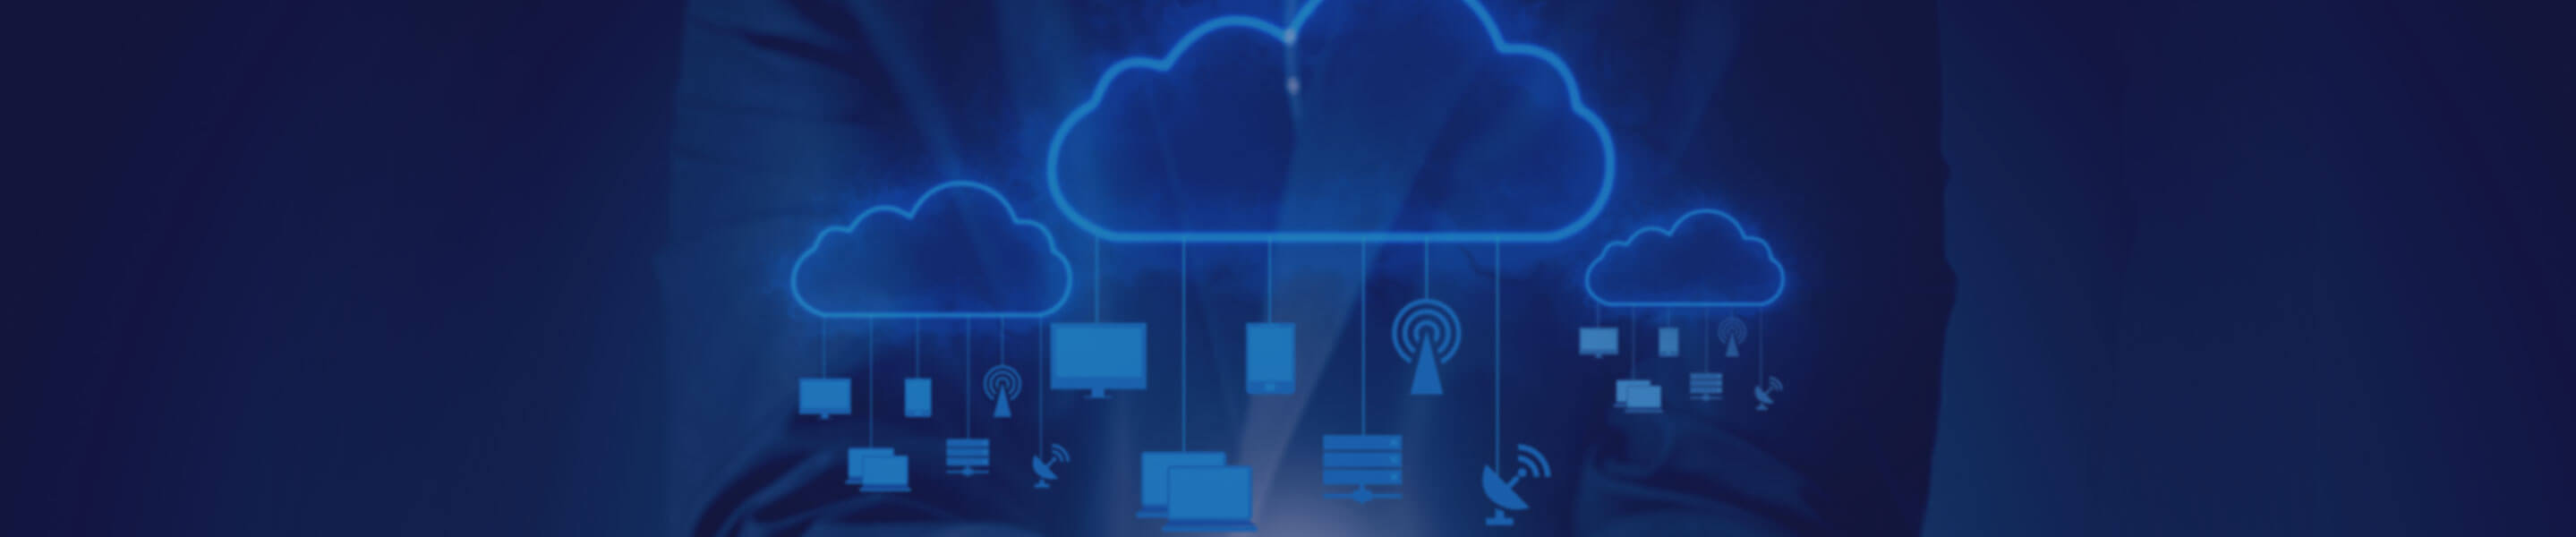 Enterprise Users | Secure Multi-Cloud Computing | Thales